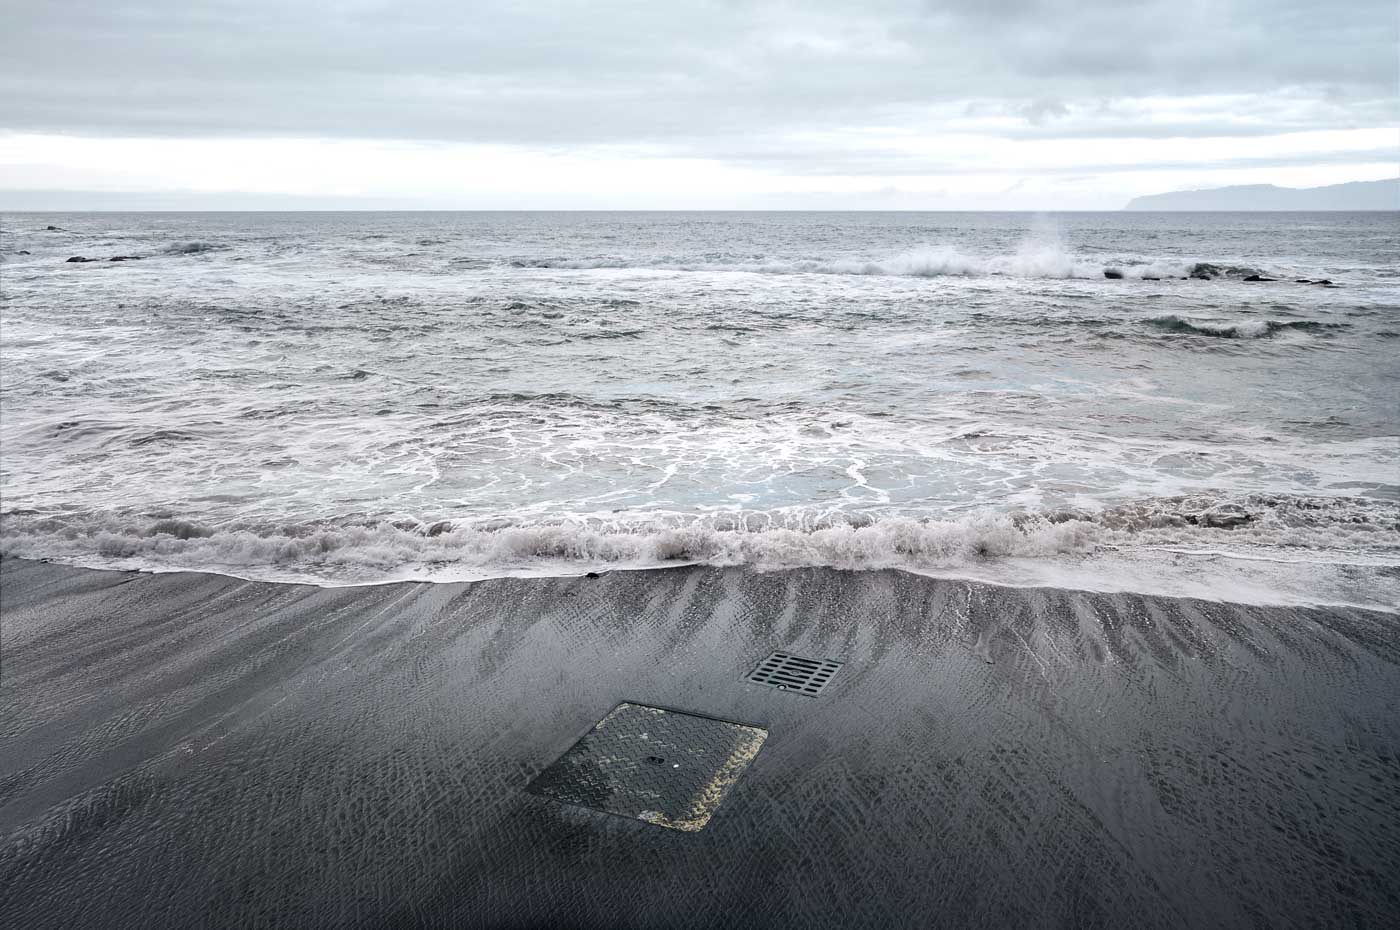 imaginary manhole cover on a black sandy beach